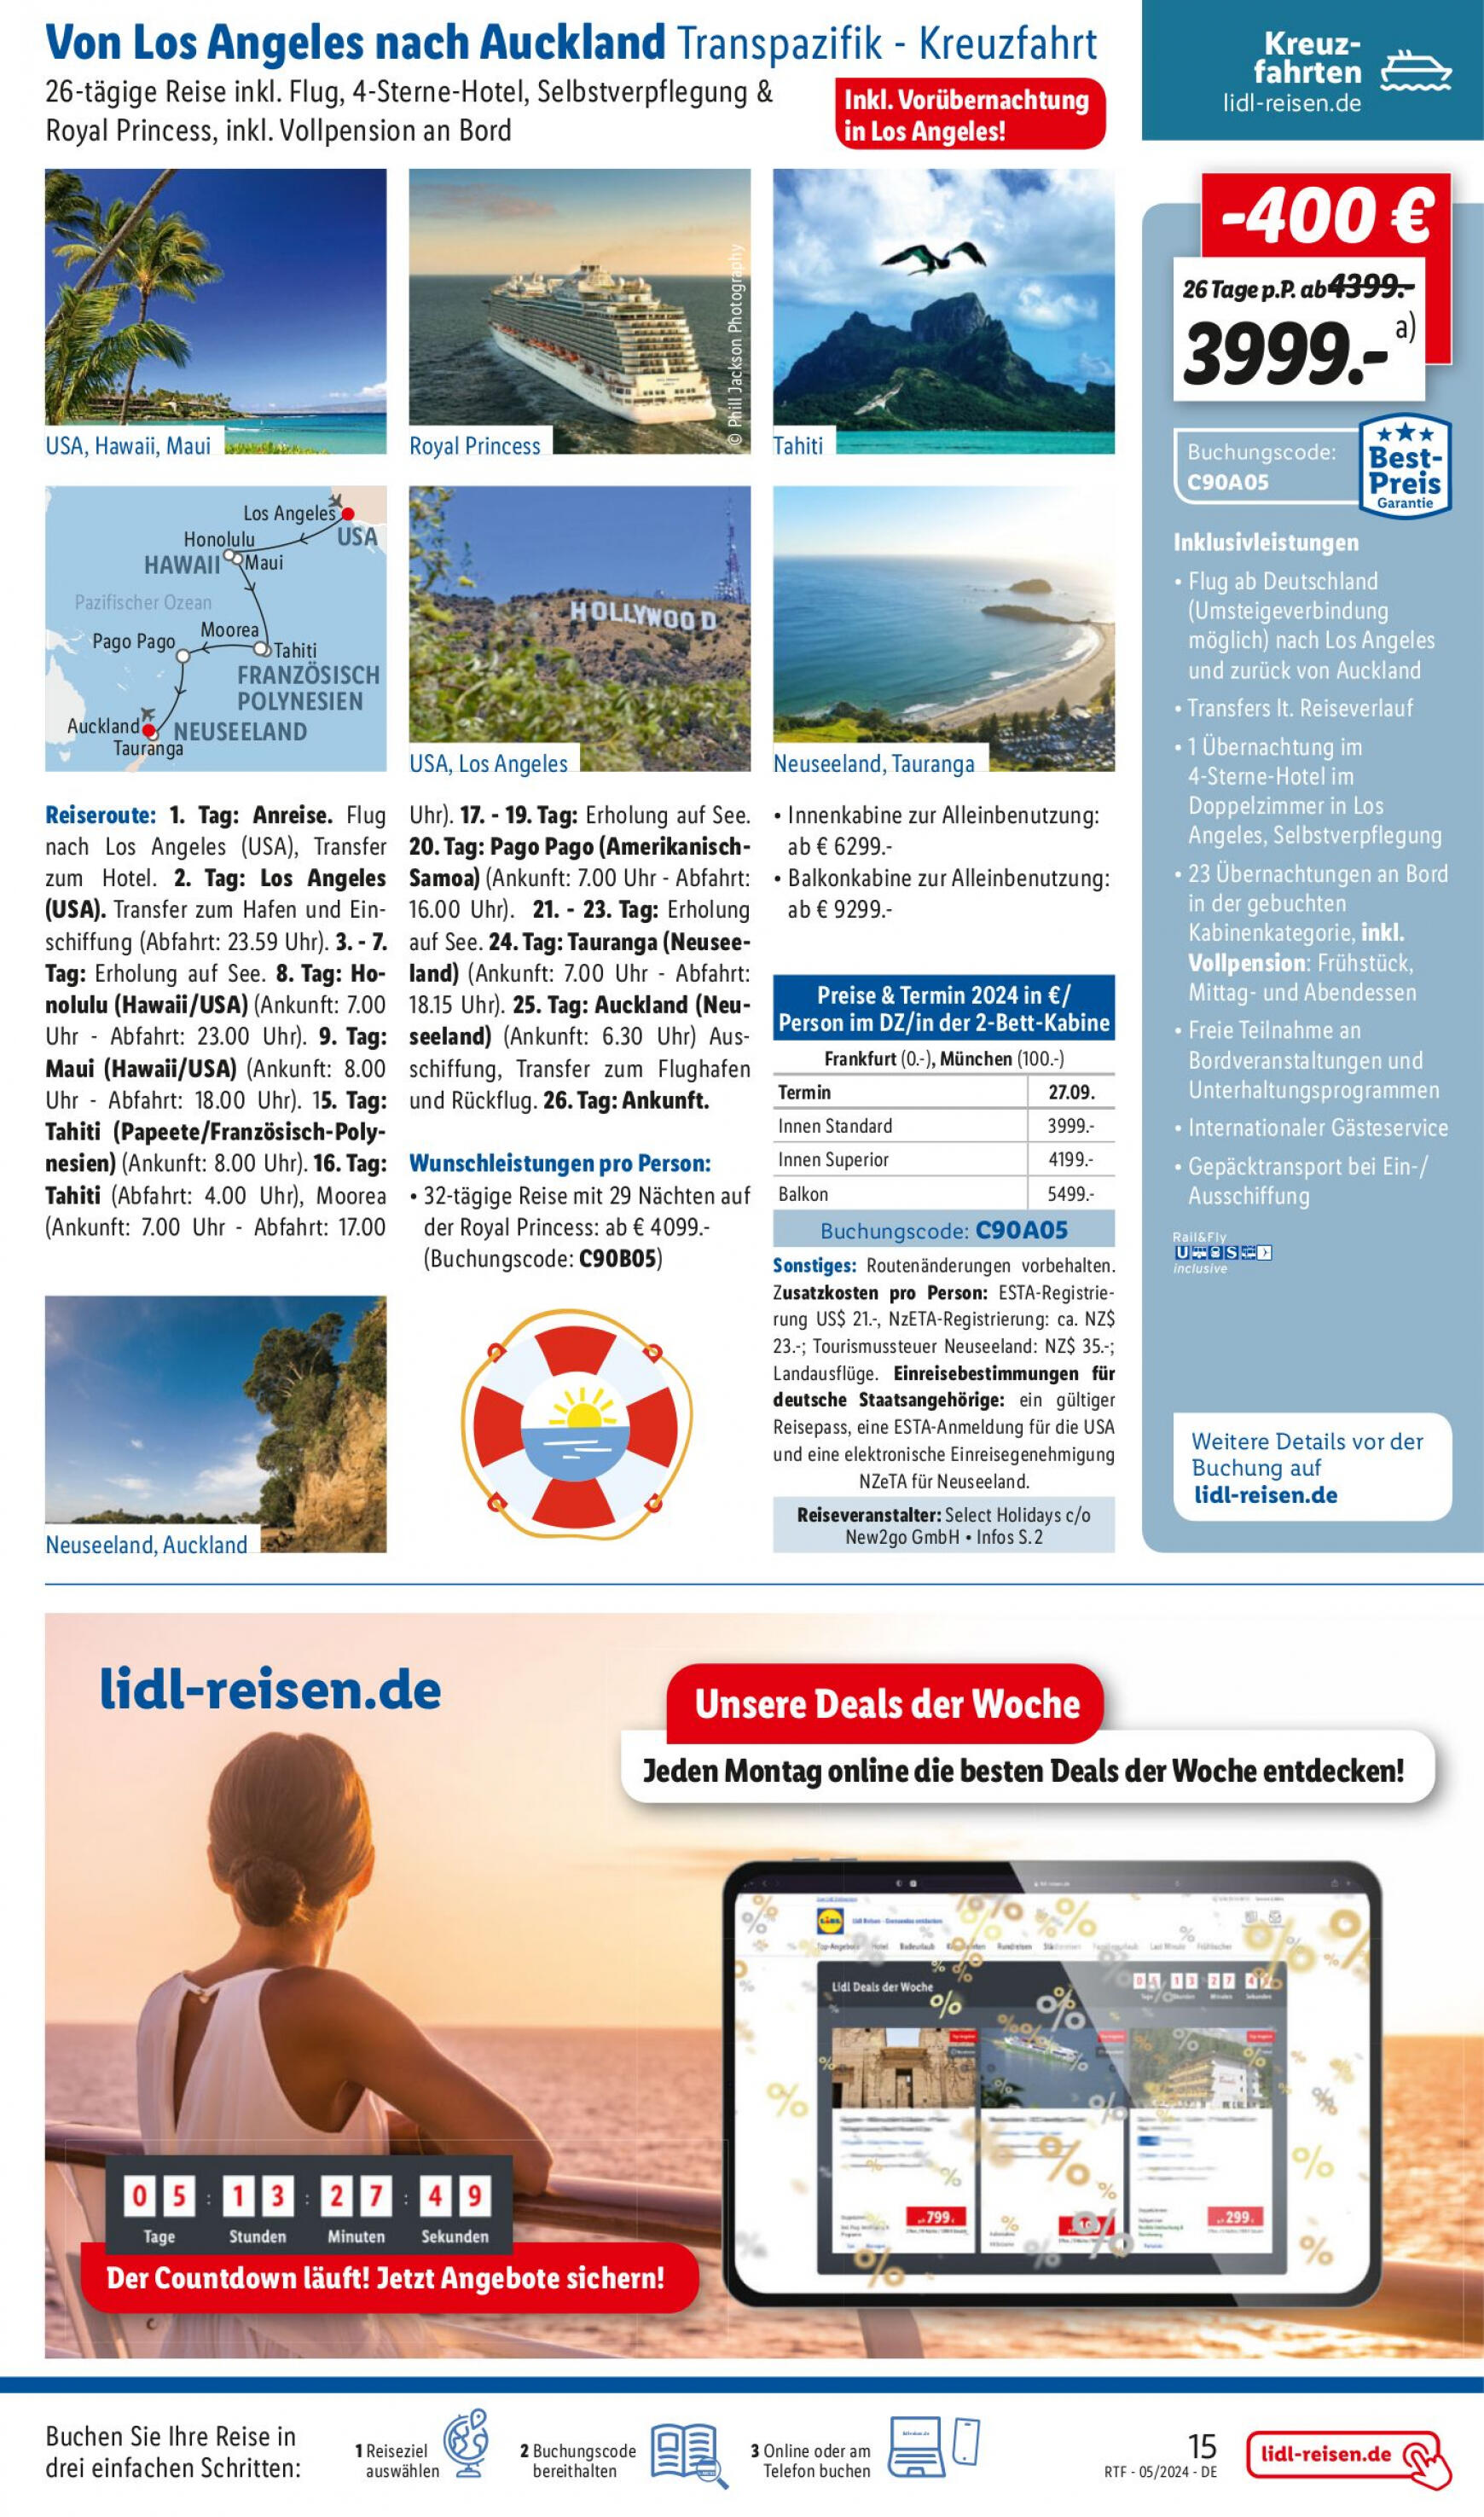 lidl - Flyer Lidl-reisen.de aktuell 15.05. - 15.06. - page: 15